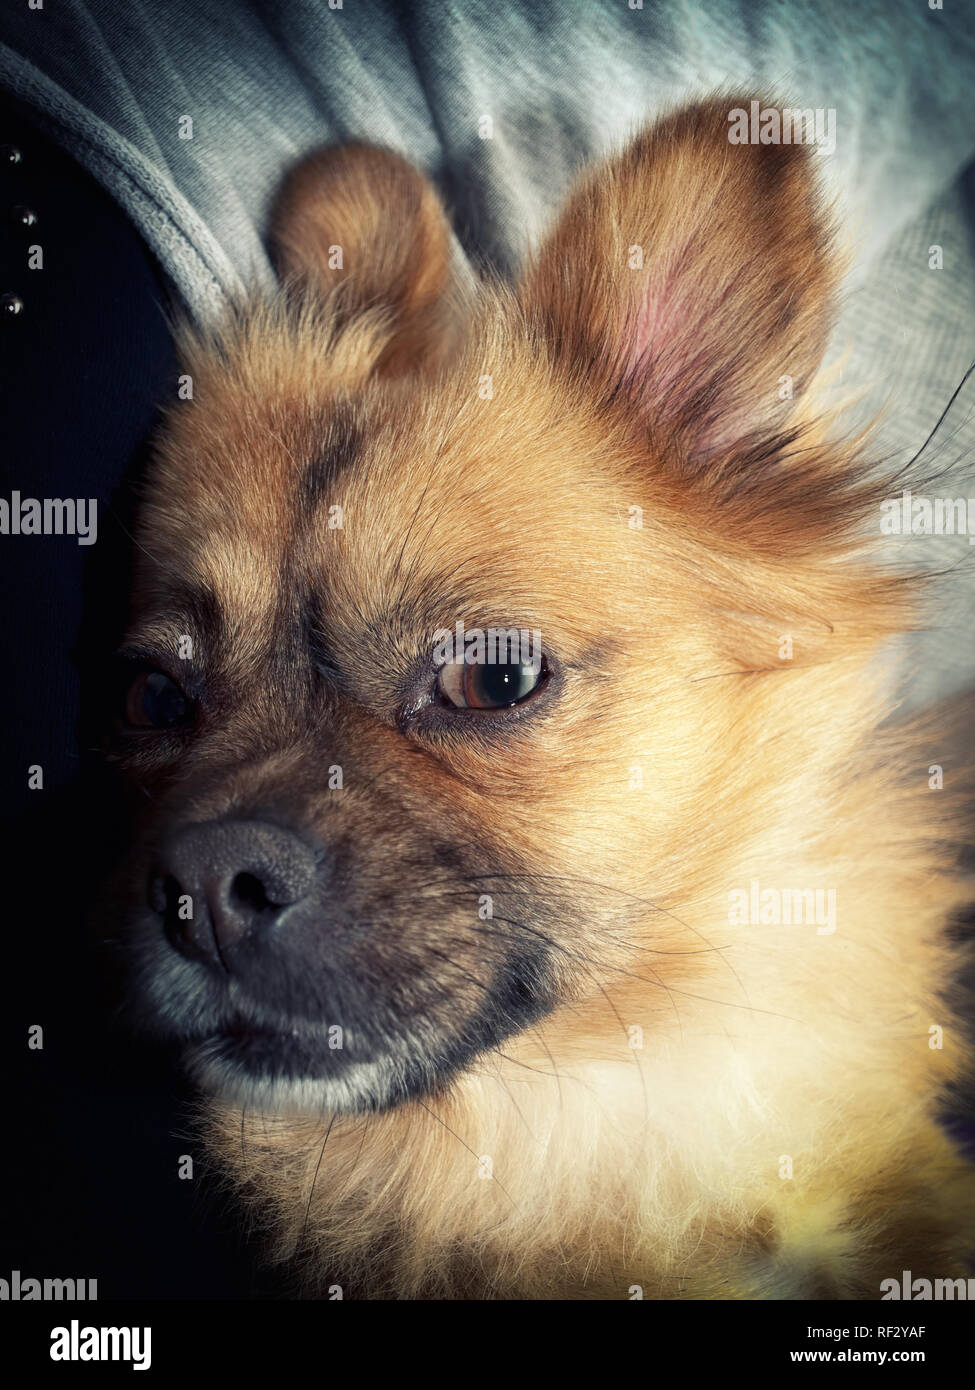 Closeup portrait of one adorable dog. Stock Photo